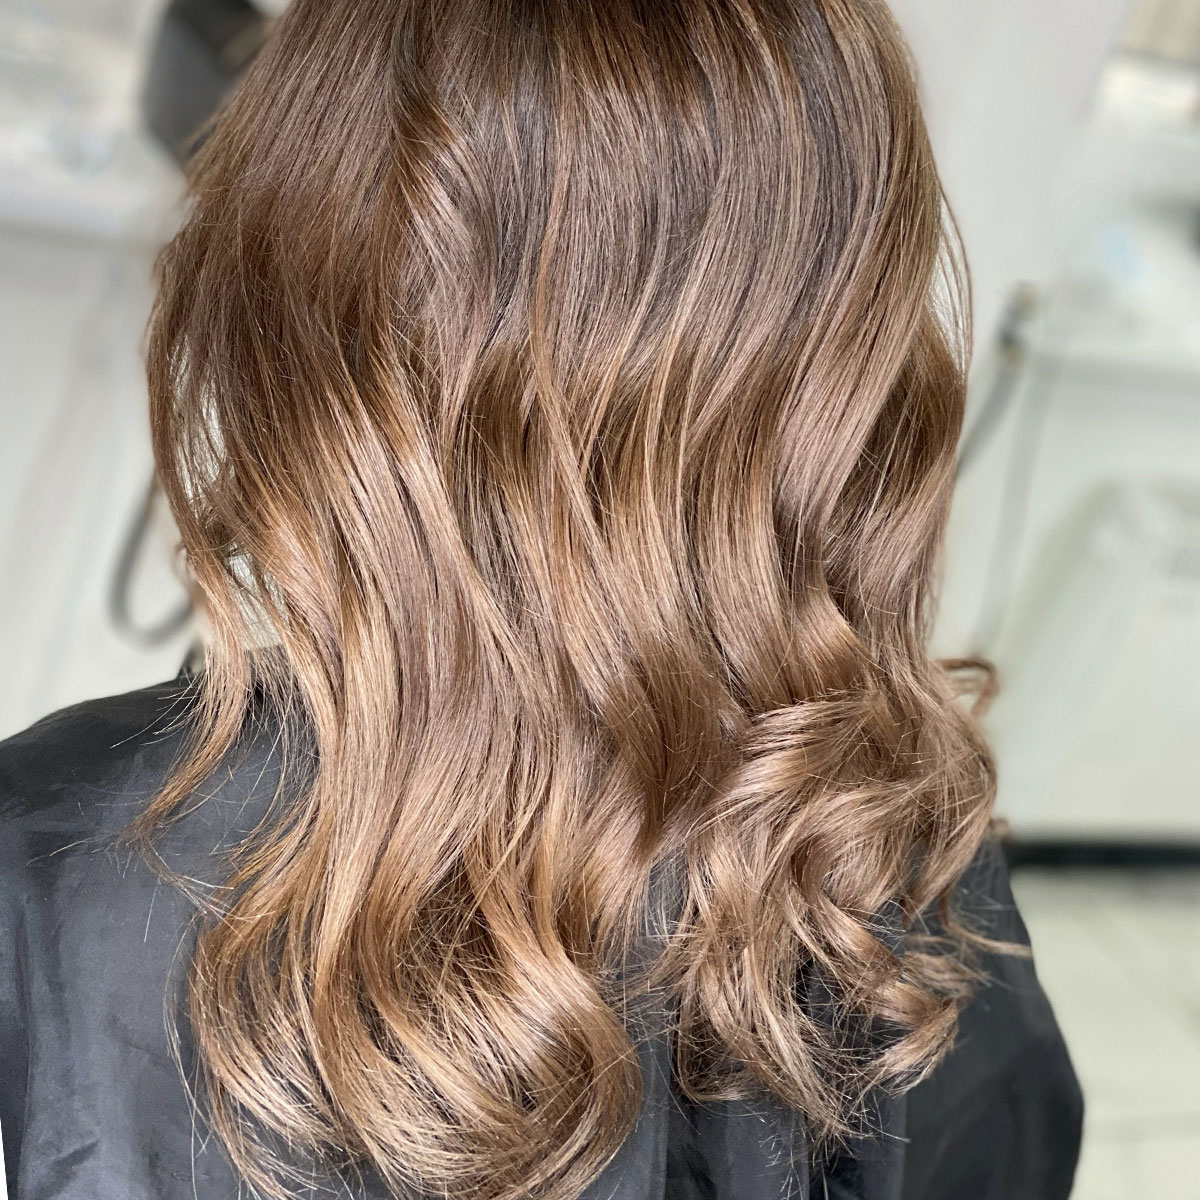 long brown curly healthy hair salon bronde color trendy